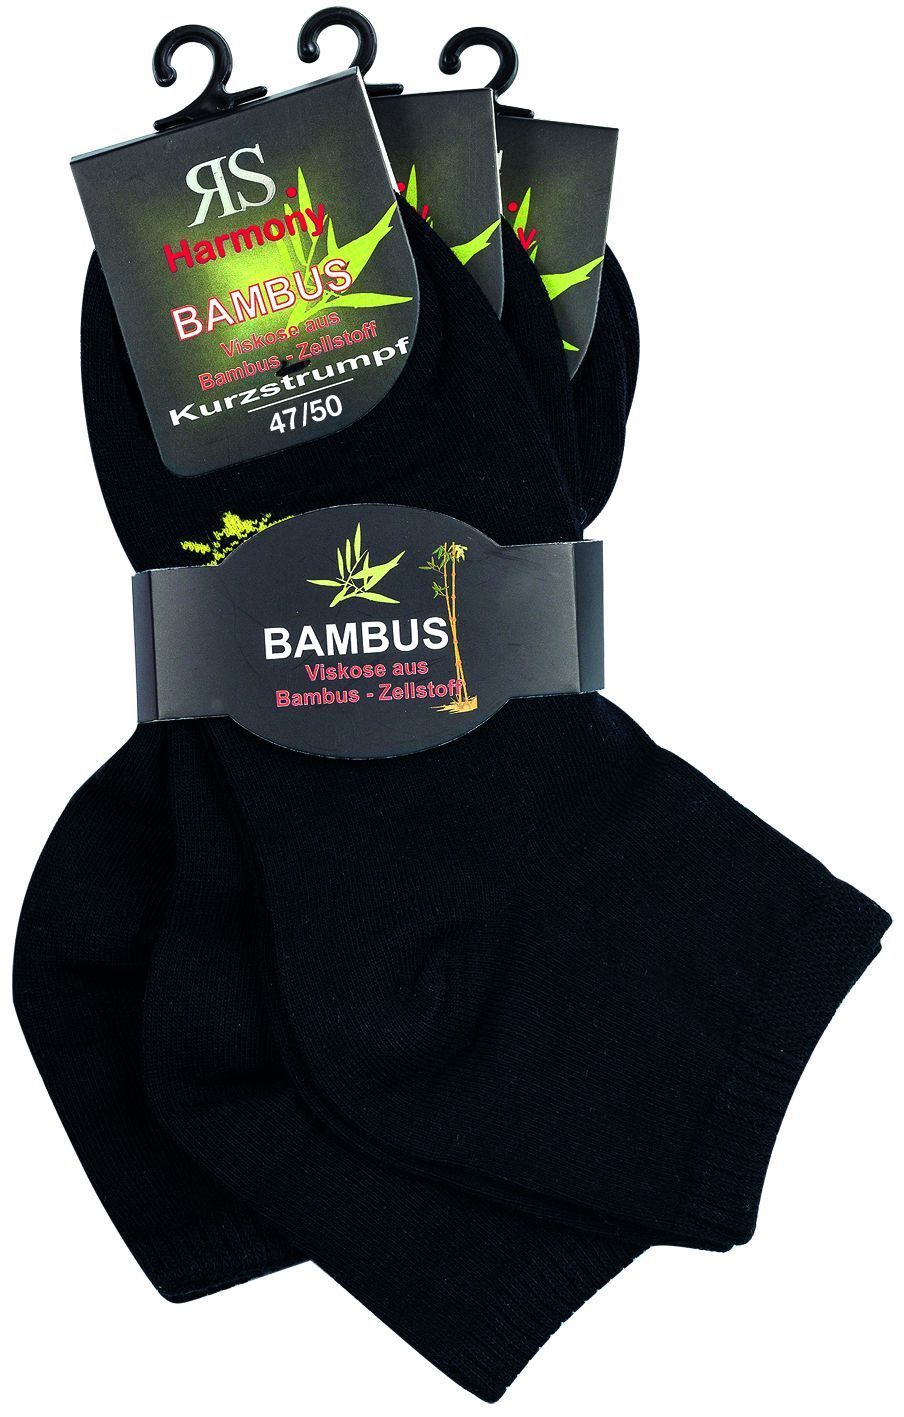 3-15 pairs of bamboo viscose short shaft socks, short stockings, quarter socks oversize 47/50